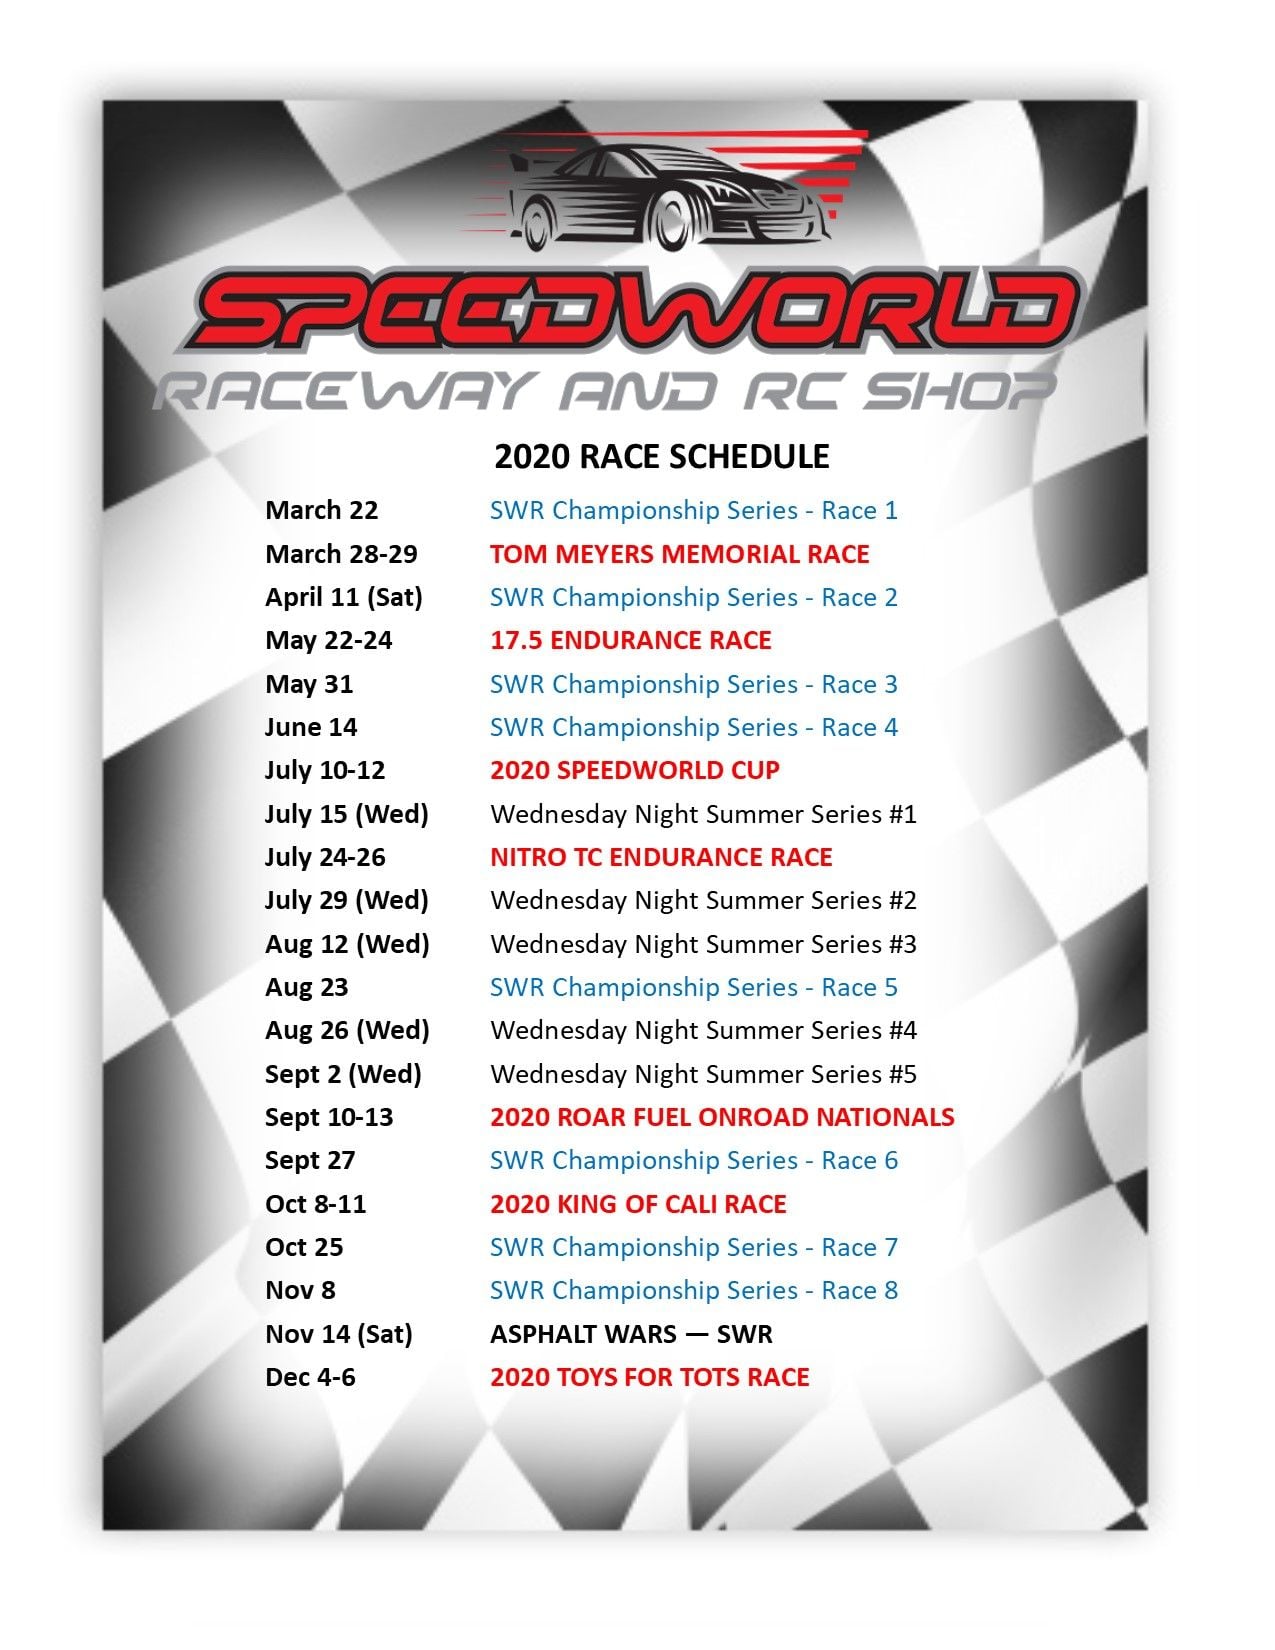 Speedworld Raceway, Roseville CA - Page 6 - R/C Tech Forums